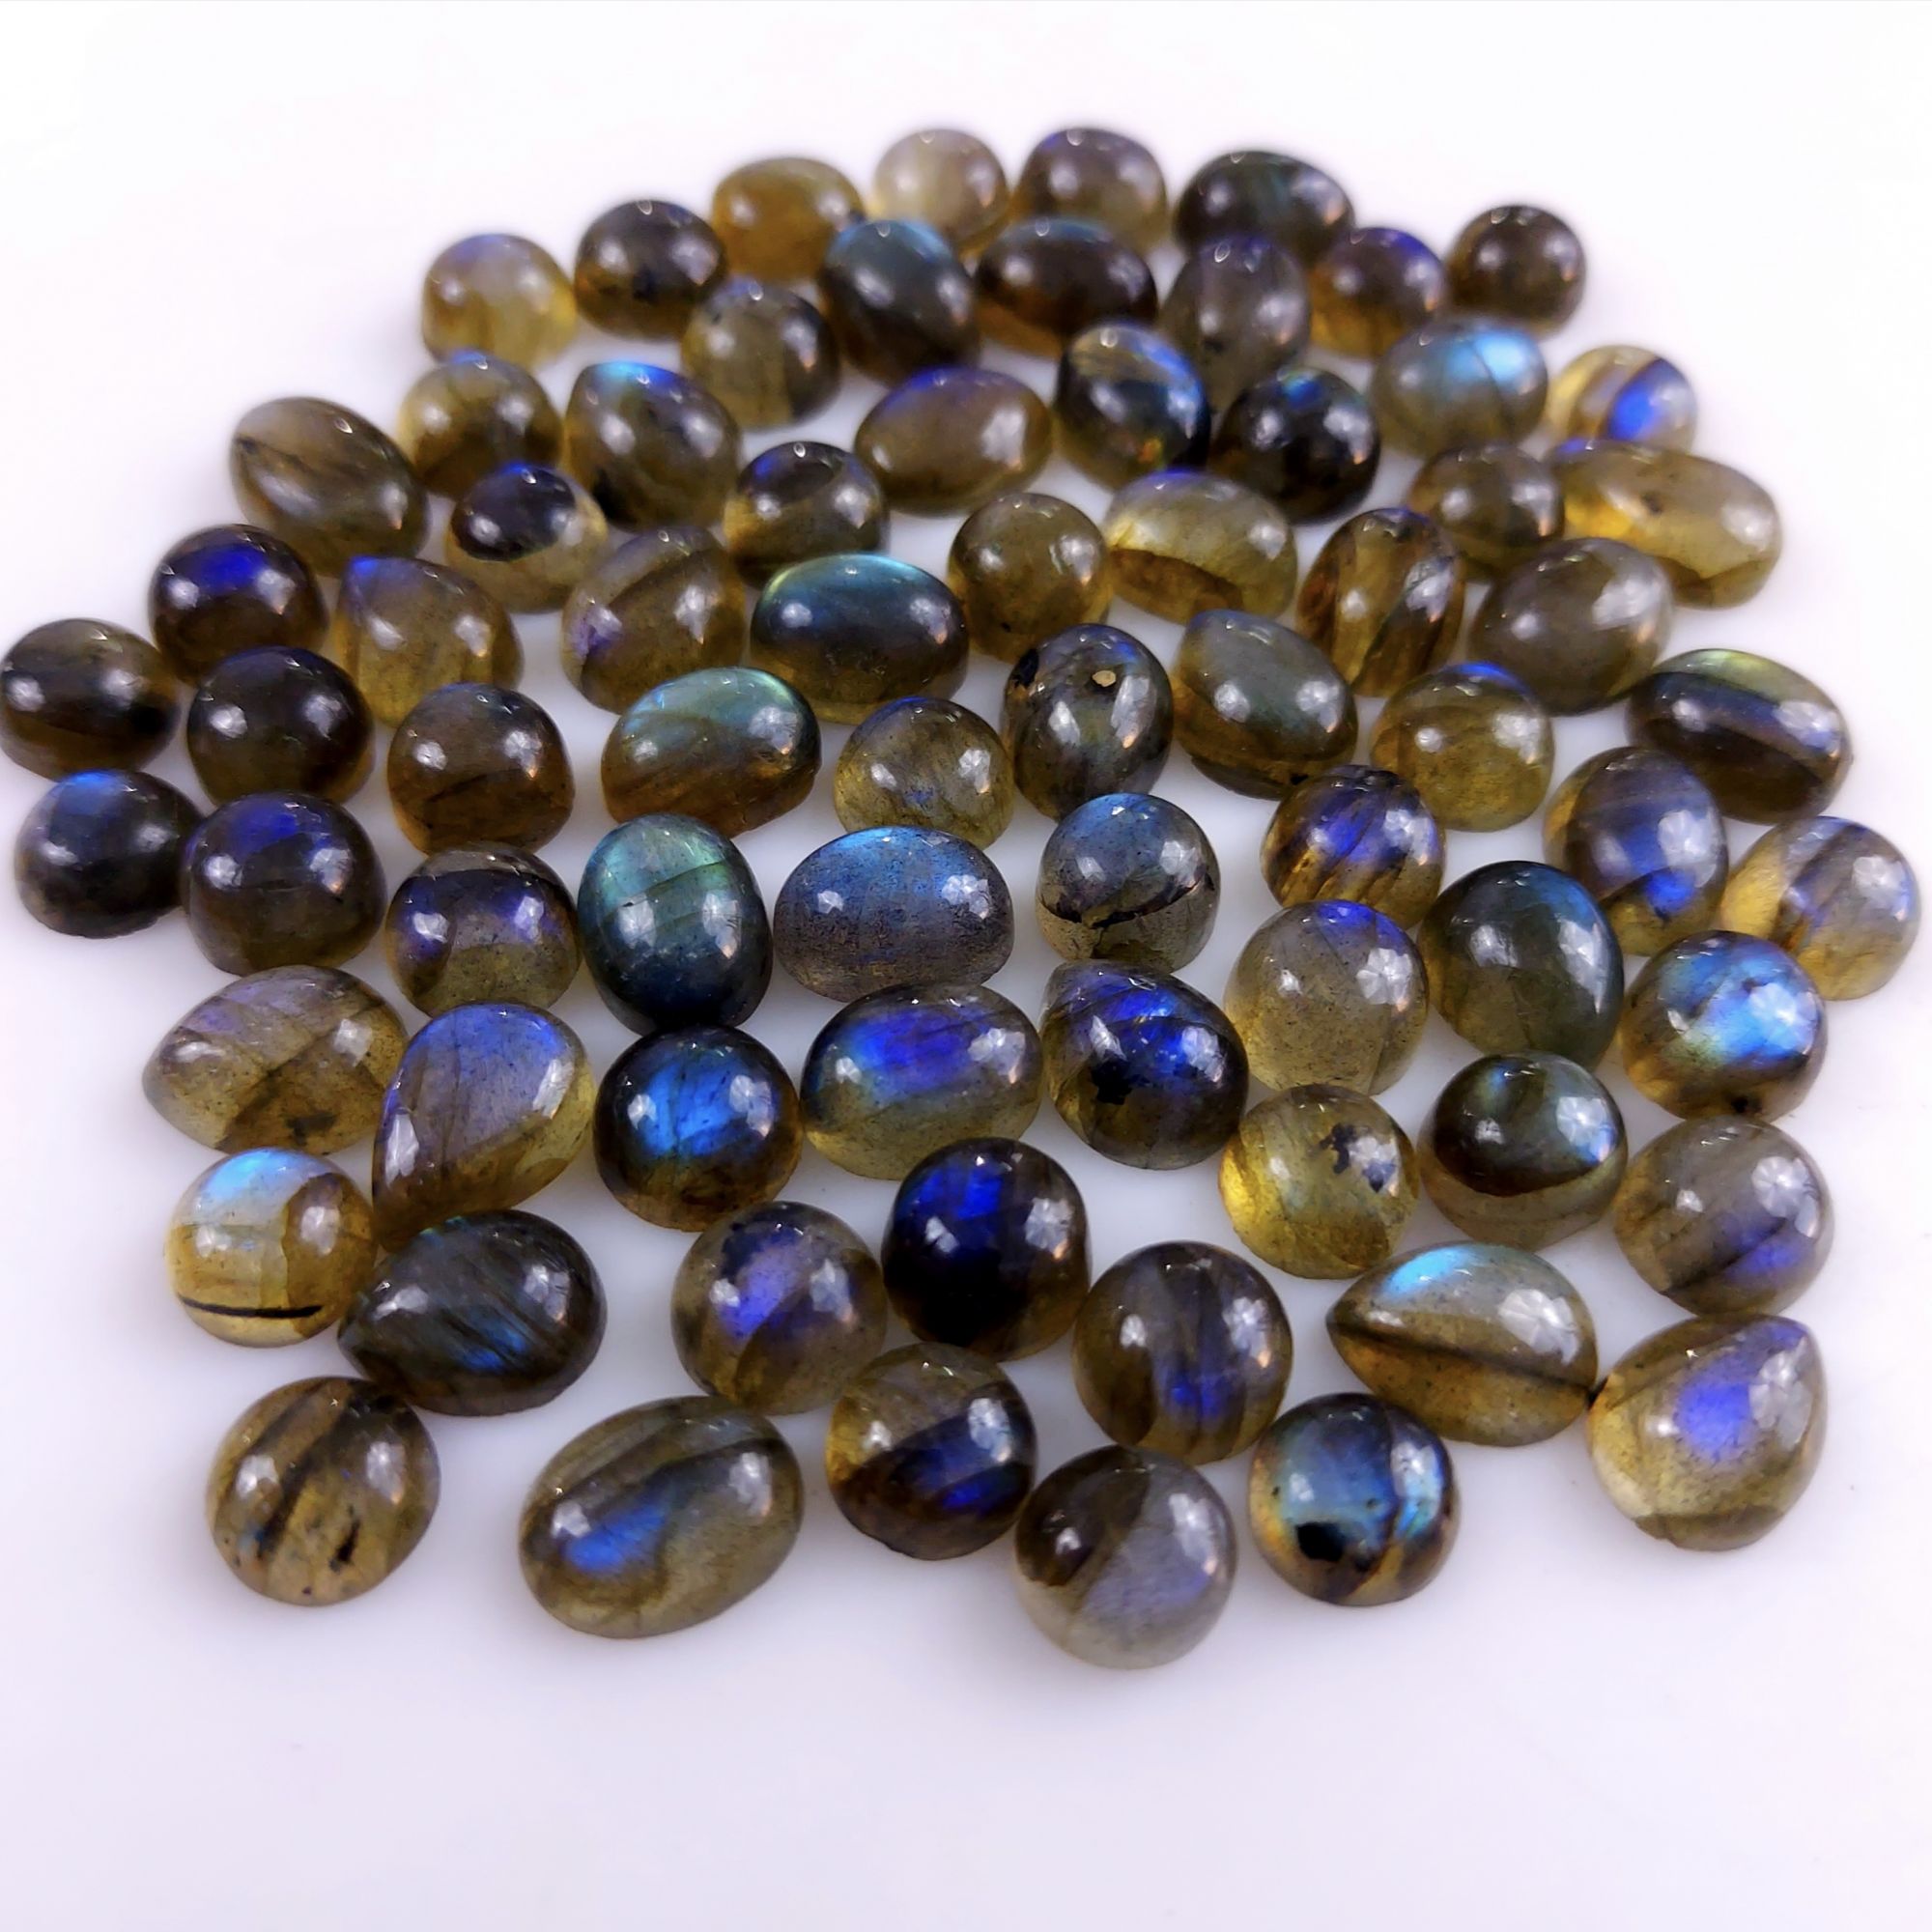 73 Pcs152Cts Natural Multifire Labradorite Loose Cabochon Gemstone Lot for Jewelry Making  8x5 5x5mm#1068